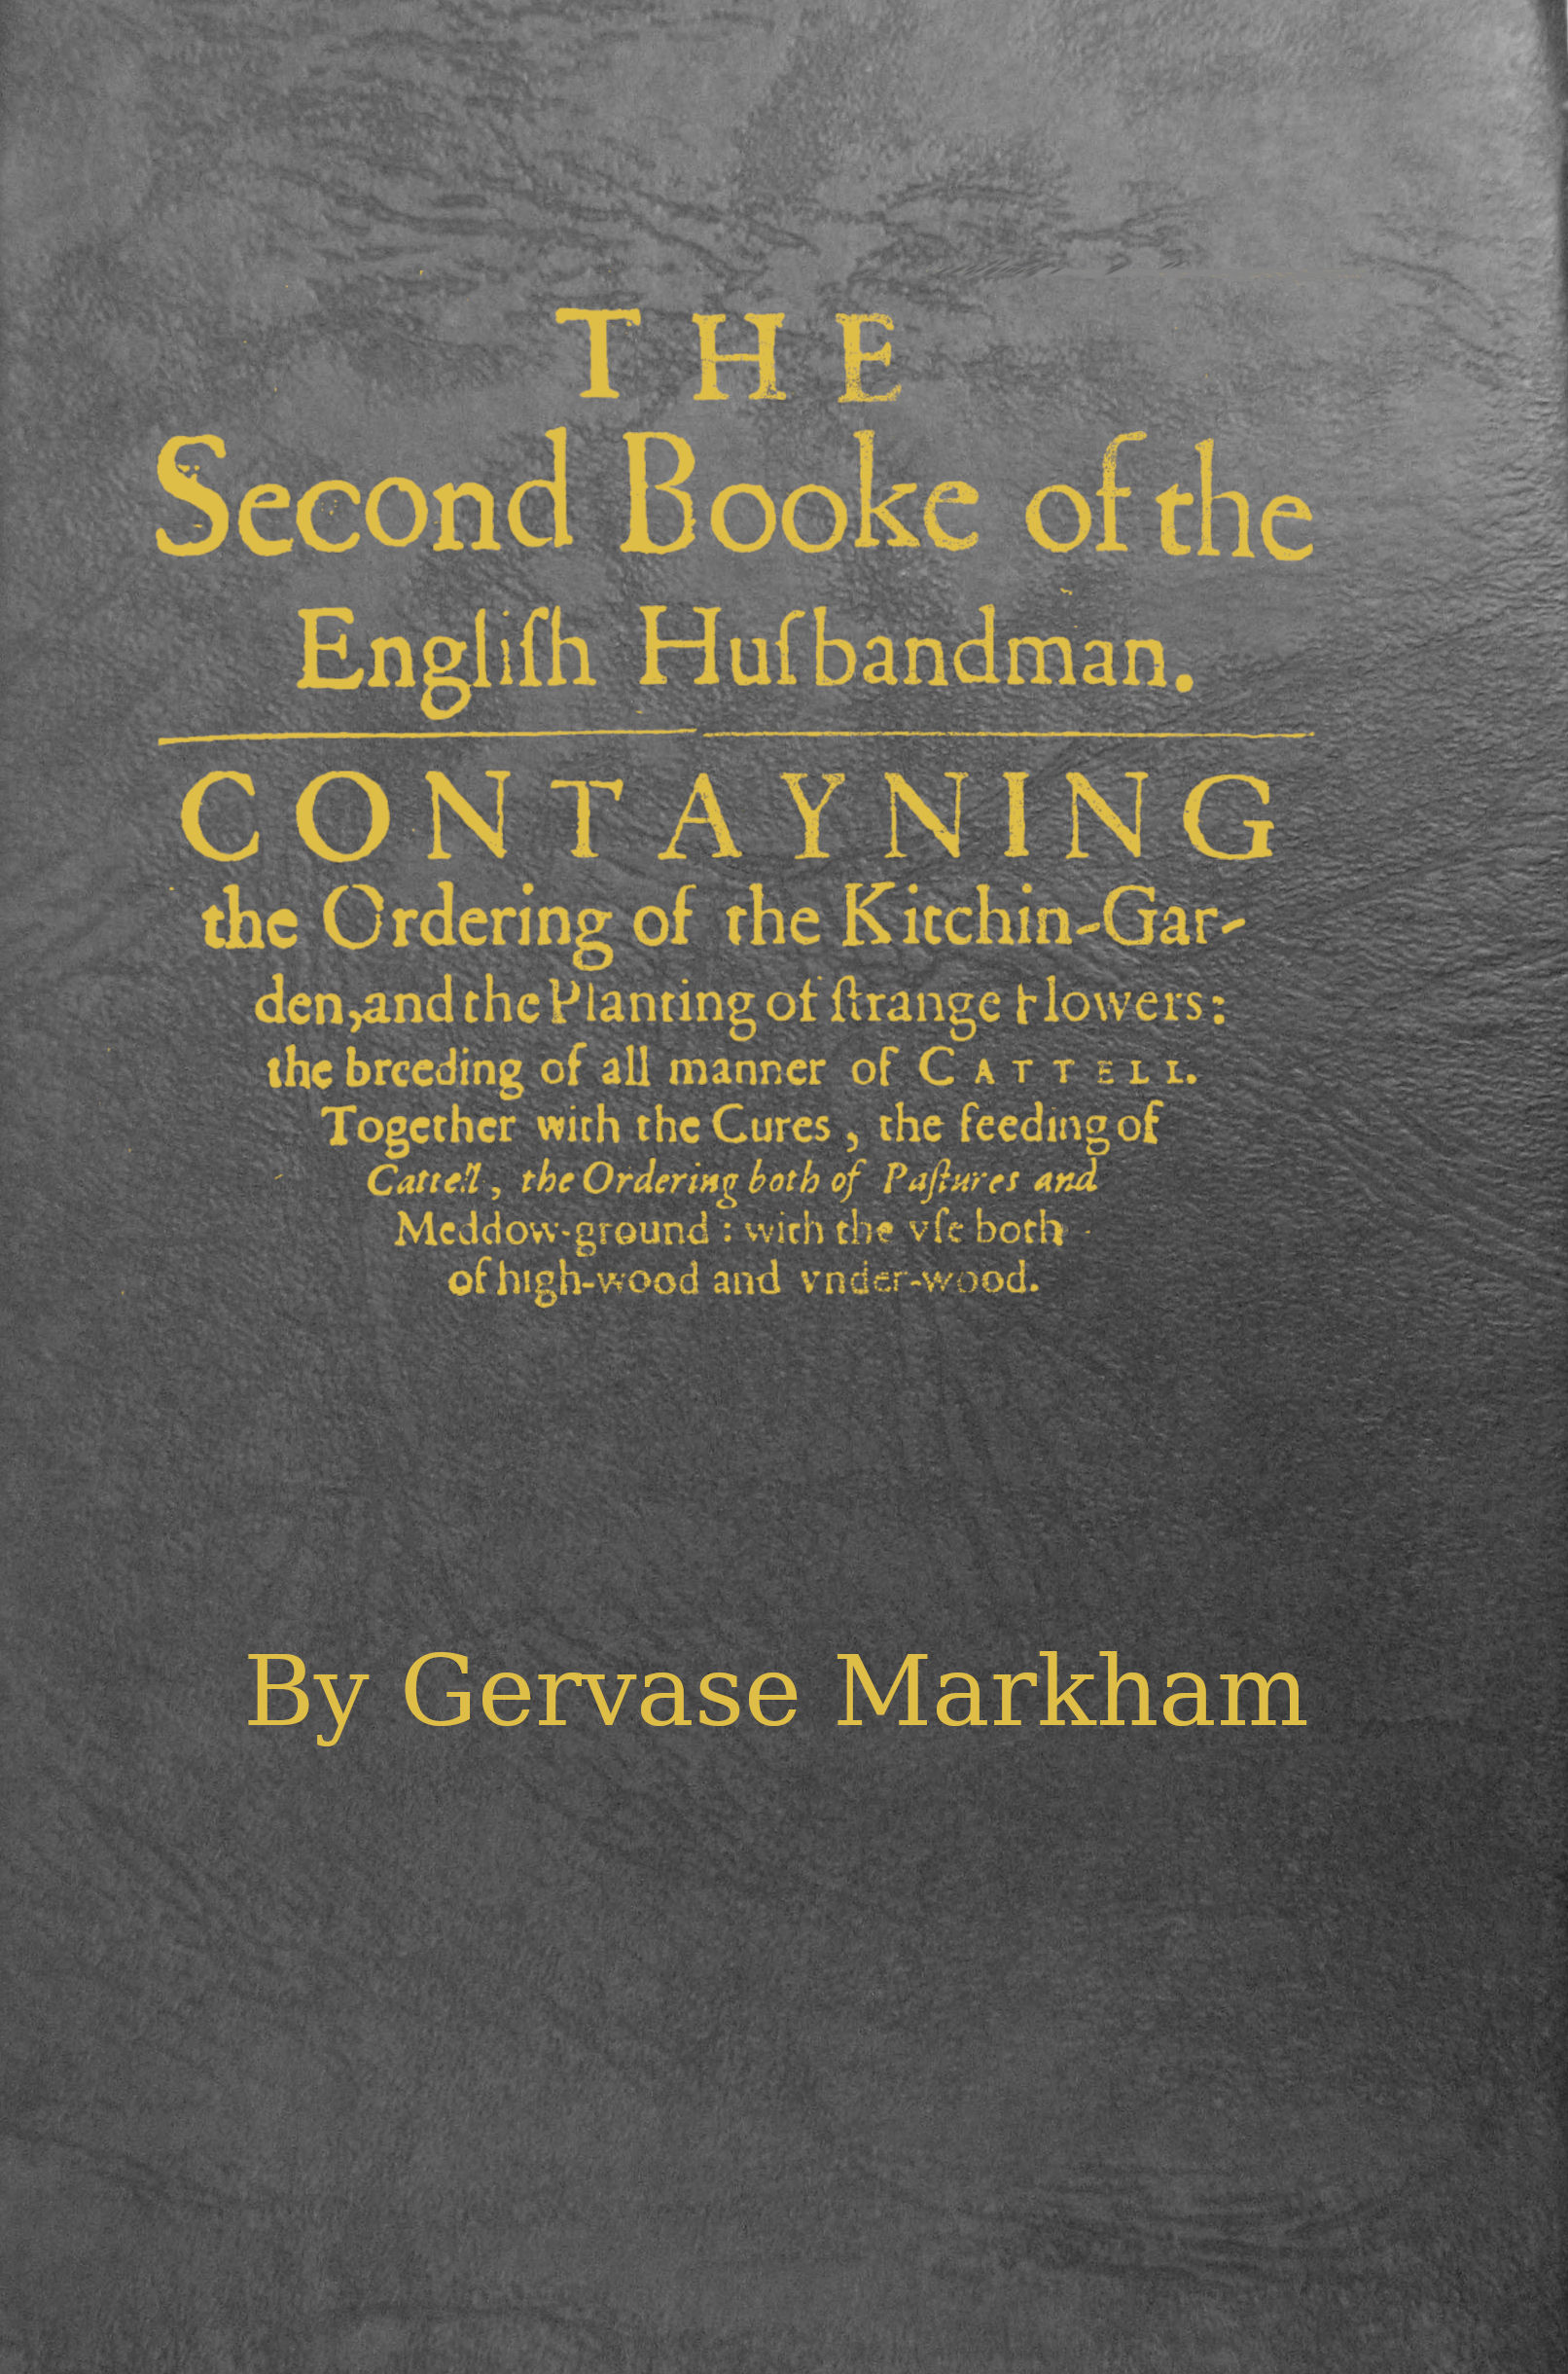 The English Husbandman (The Second Booke)&#10;